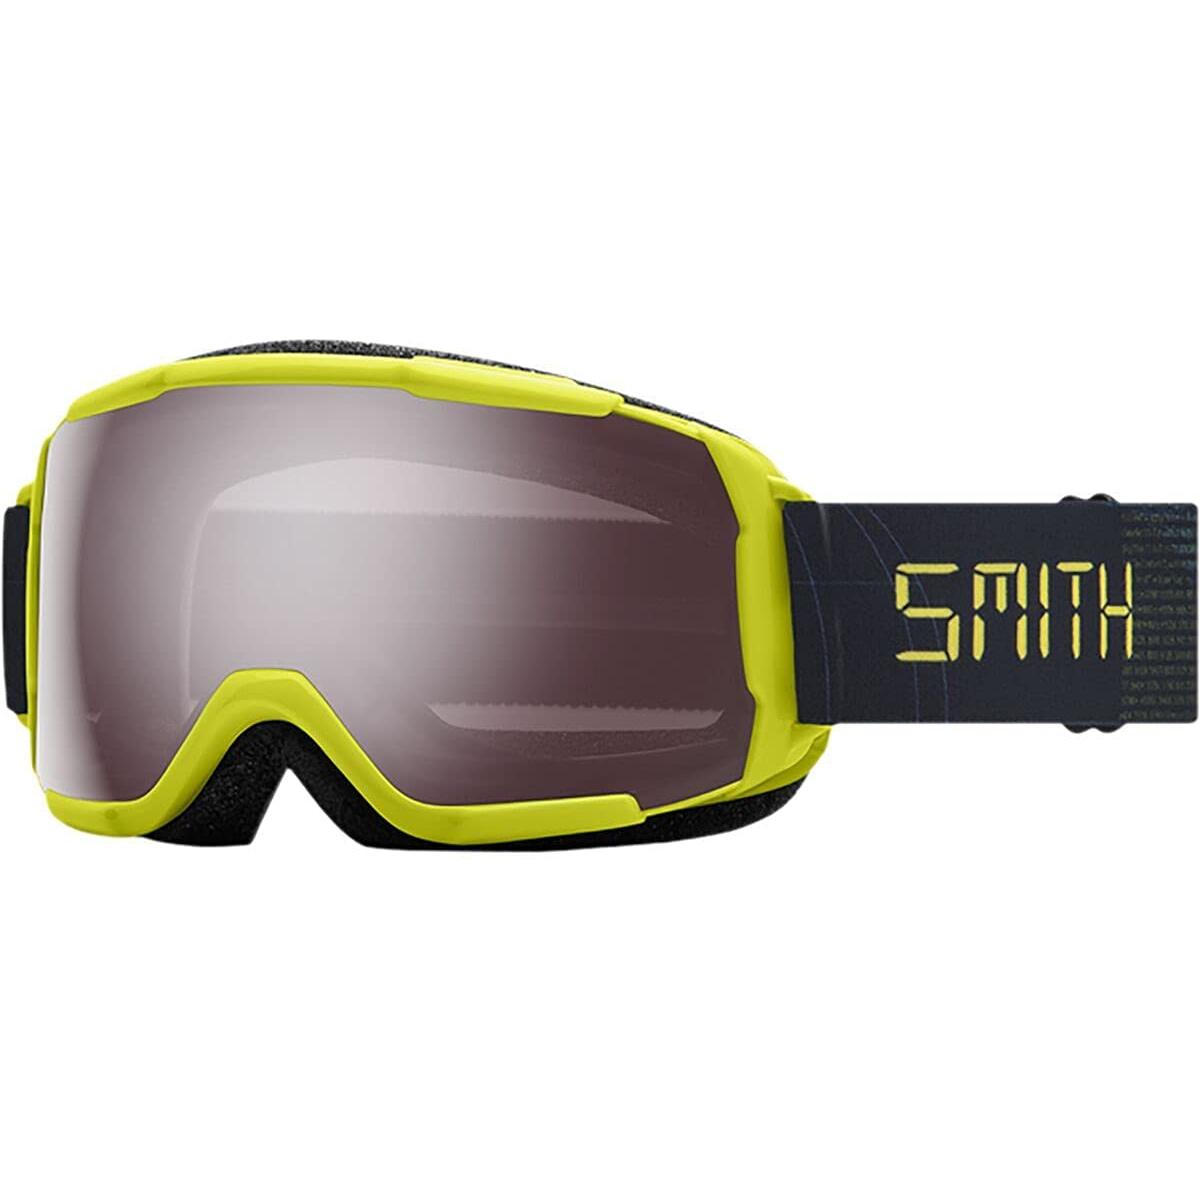 Smith Optics Grom Snow Goggles